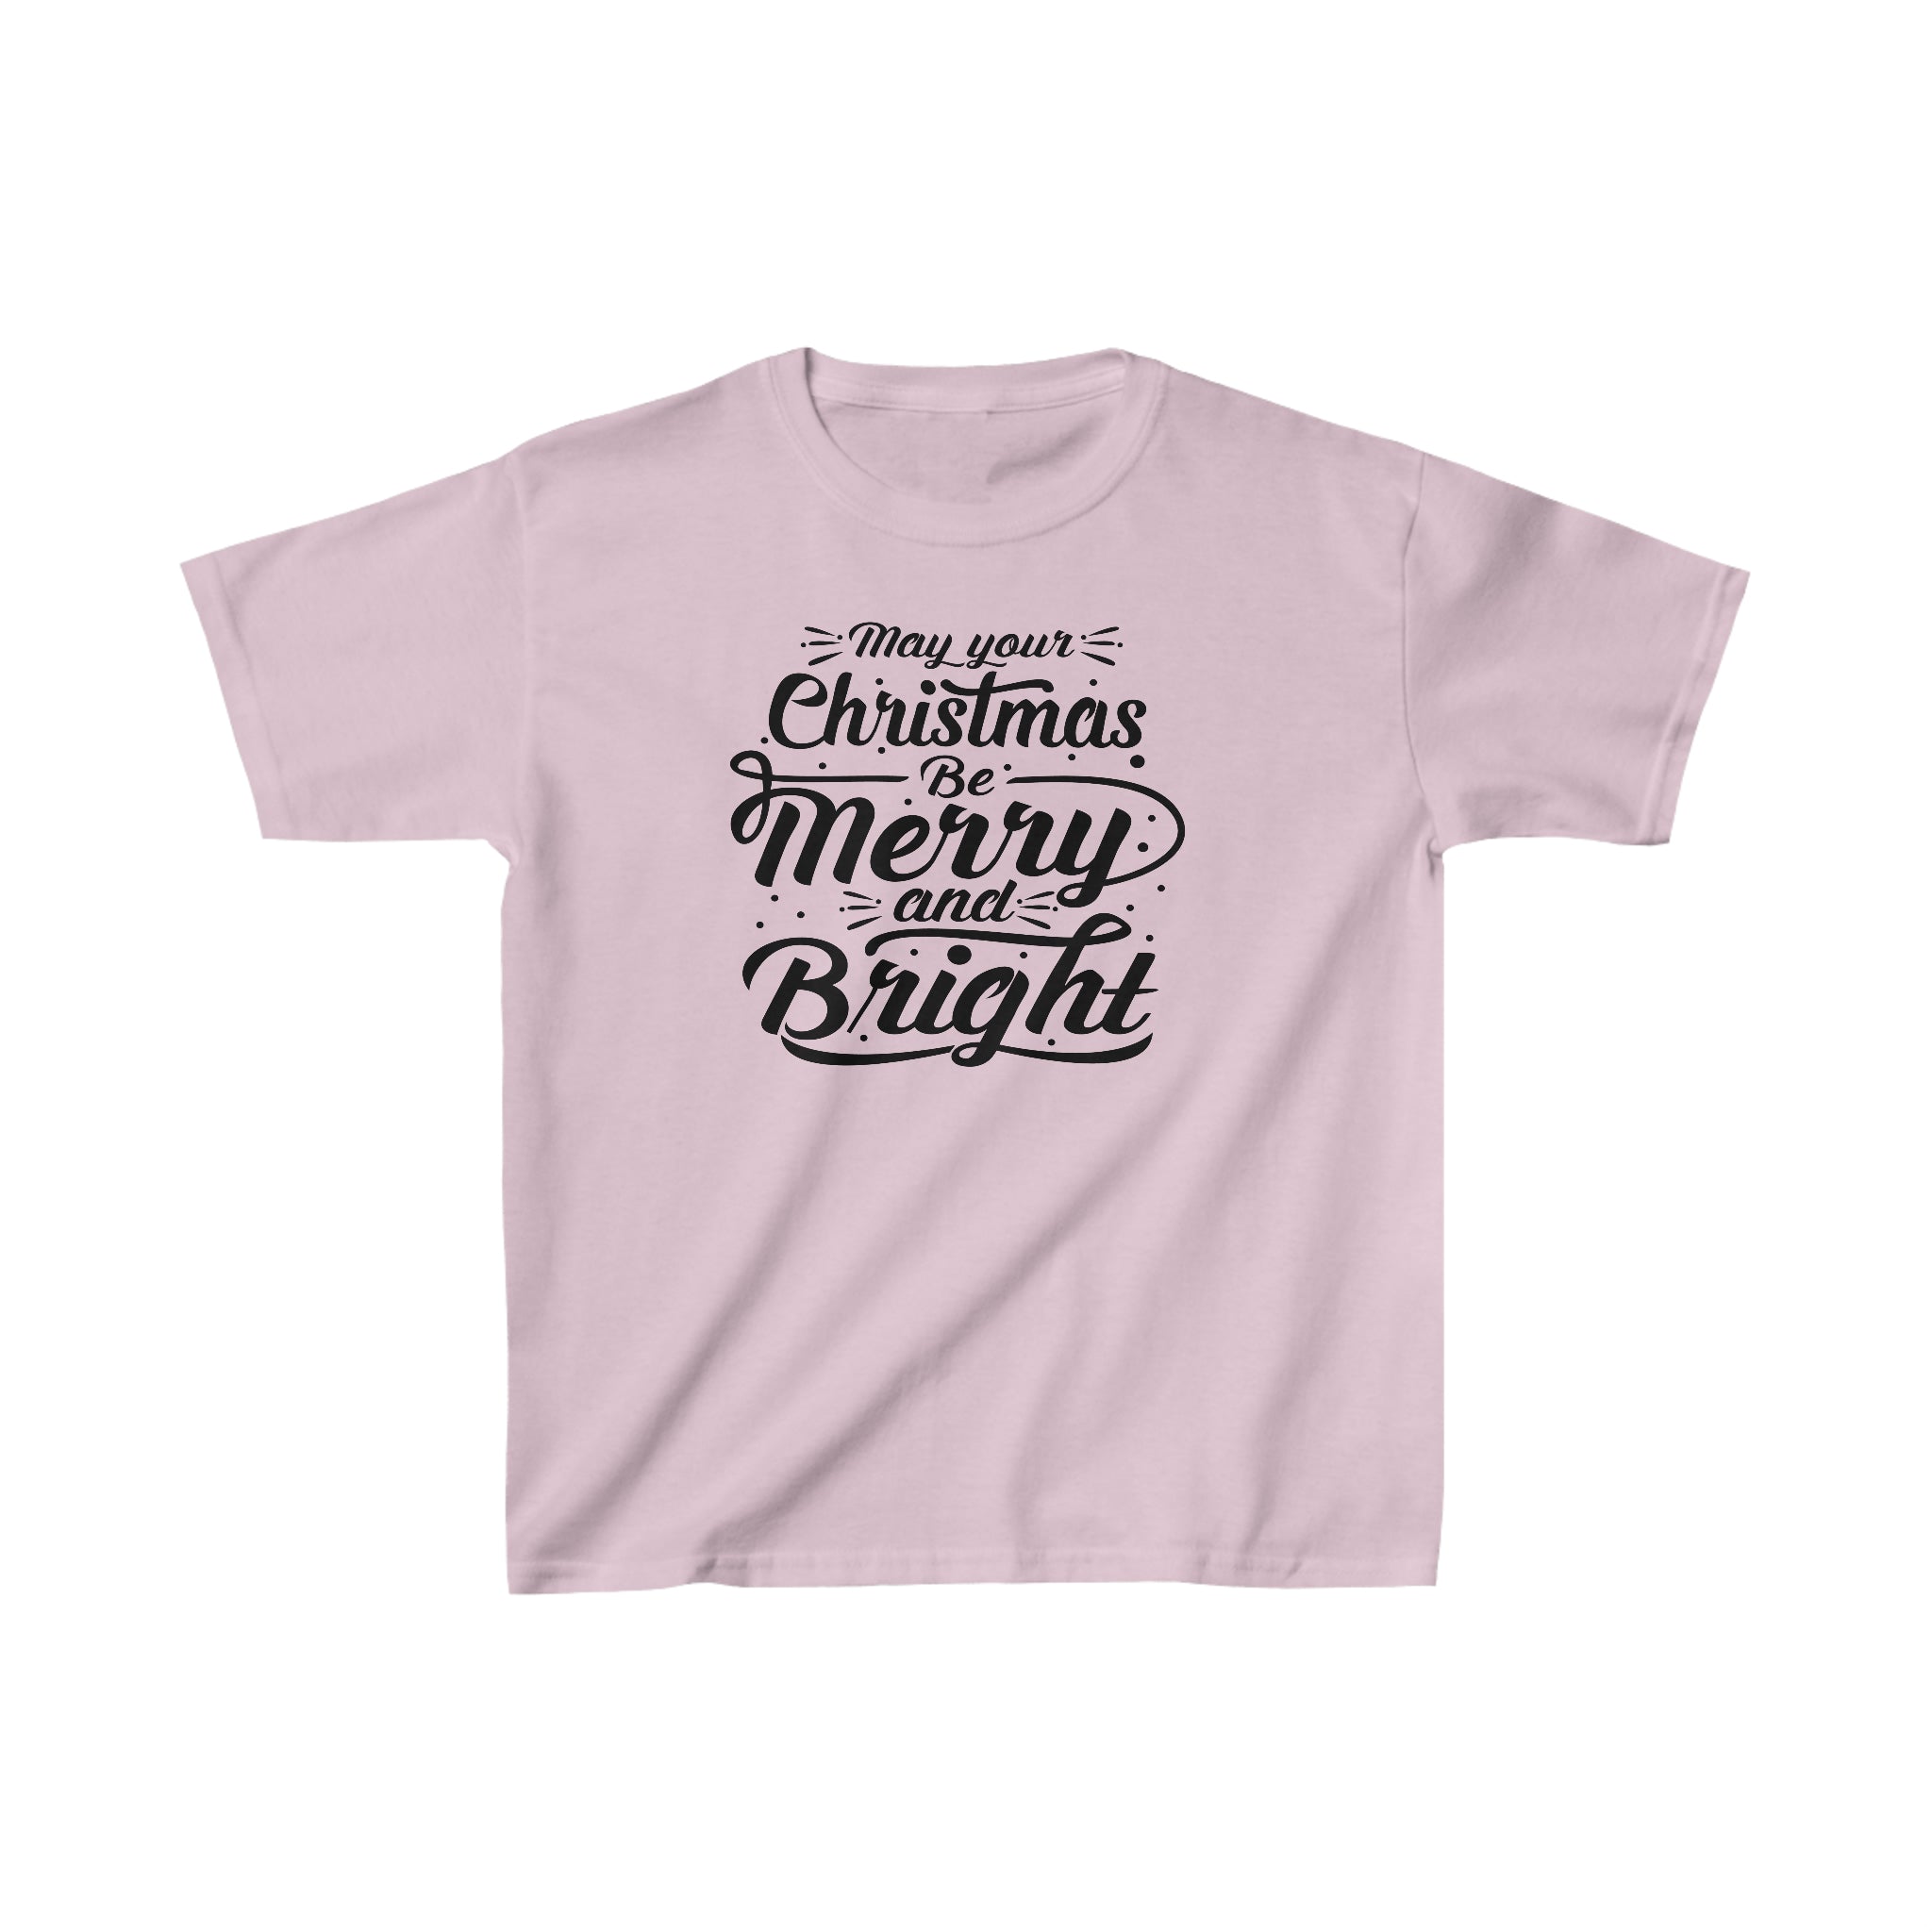 Merry and Bright Kids Christmas Tee, Kids Christmas T-shirt, Merry Christmas Kids T-shirt, Unisex Kids T-shirts, Unisex jersey short sleeve kids tee